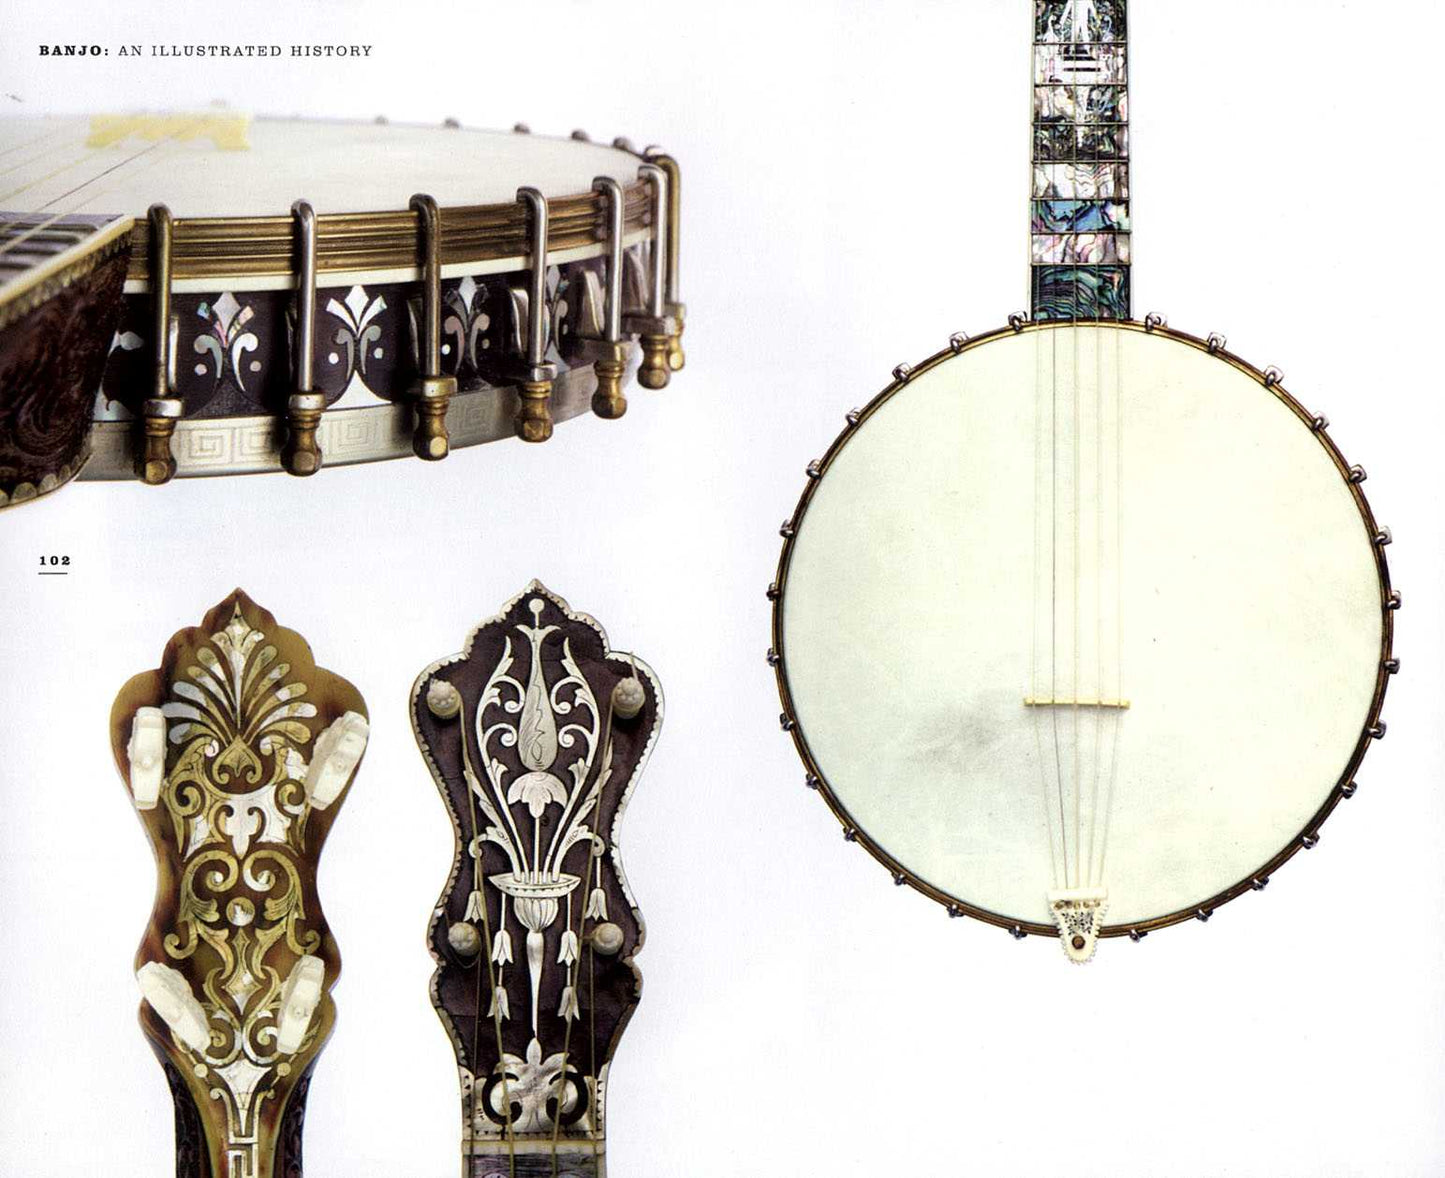 Image 3 of Banjo-An Illustrated History - SKU# 49-142046 : Product Type Media : Elderly Instruments